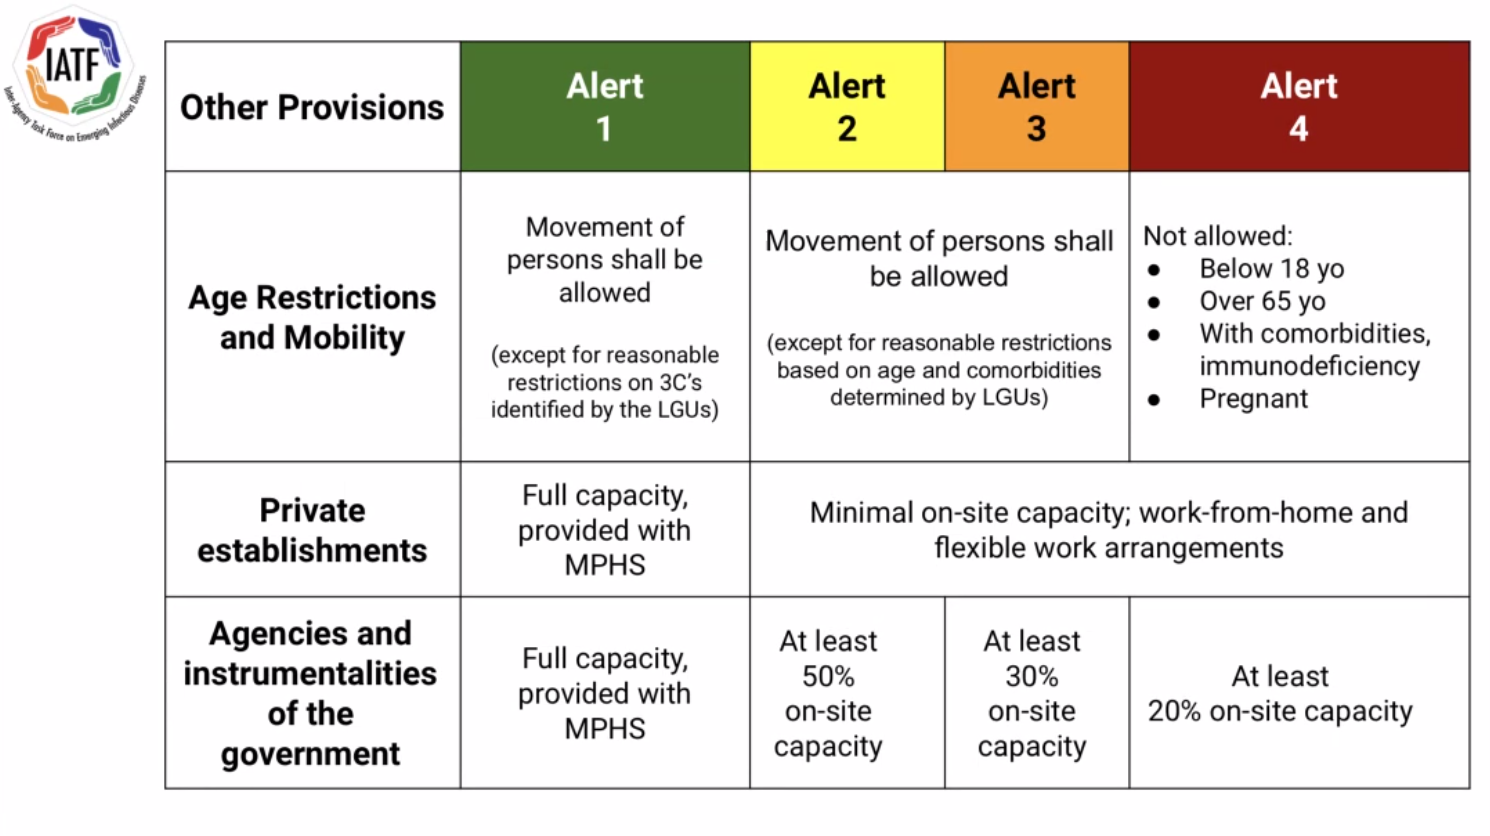 NCR granular alert level - COVID-19 Alert Levels